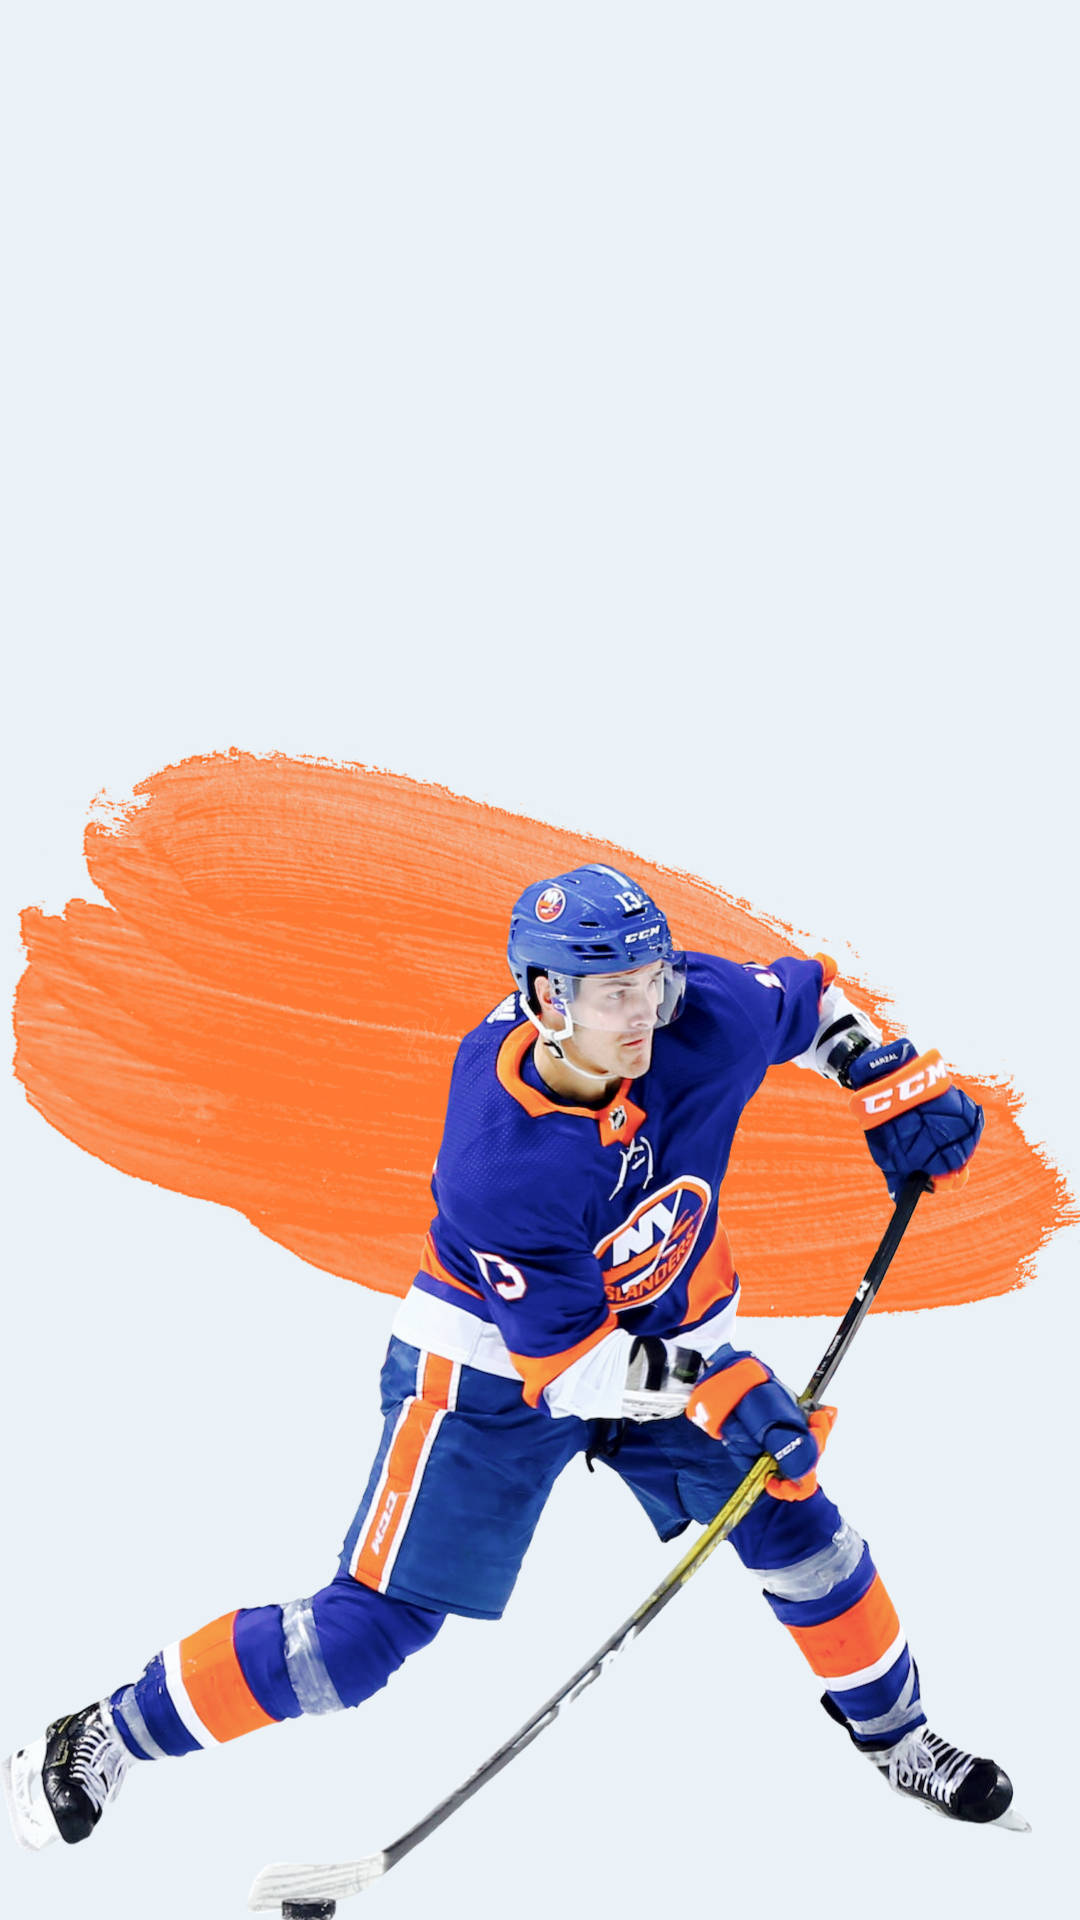 Canadian Ice Hockey Player Mathew Barzal Creative Digital Art Wallpaper